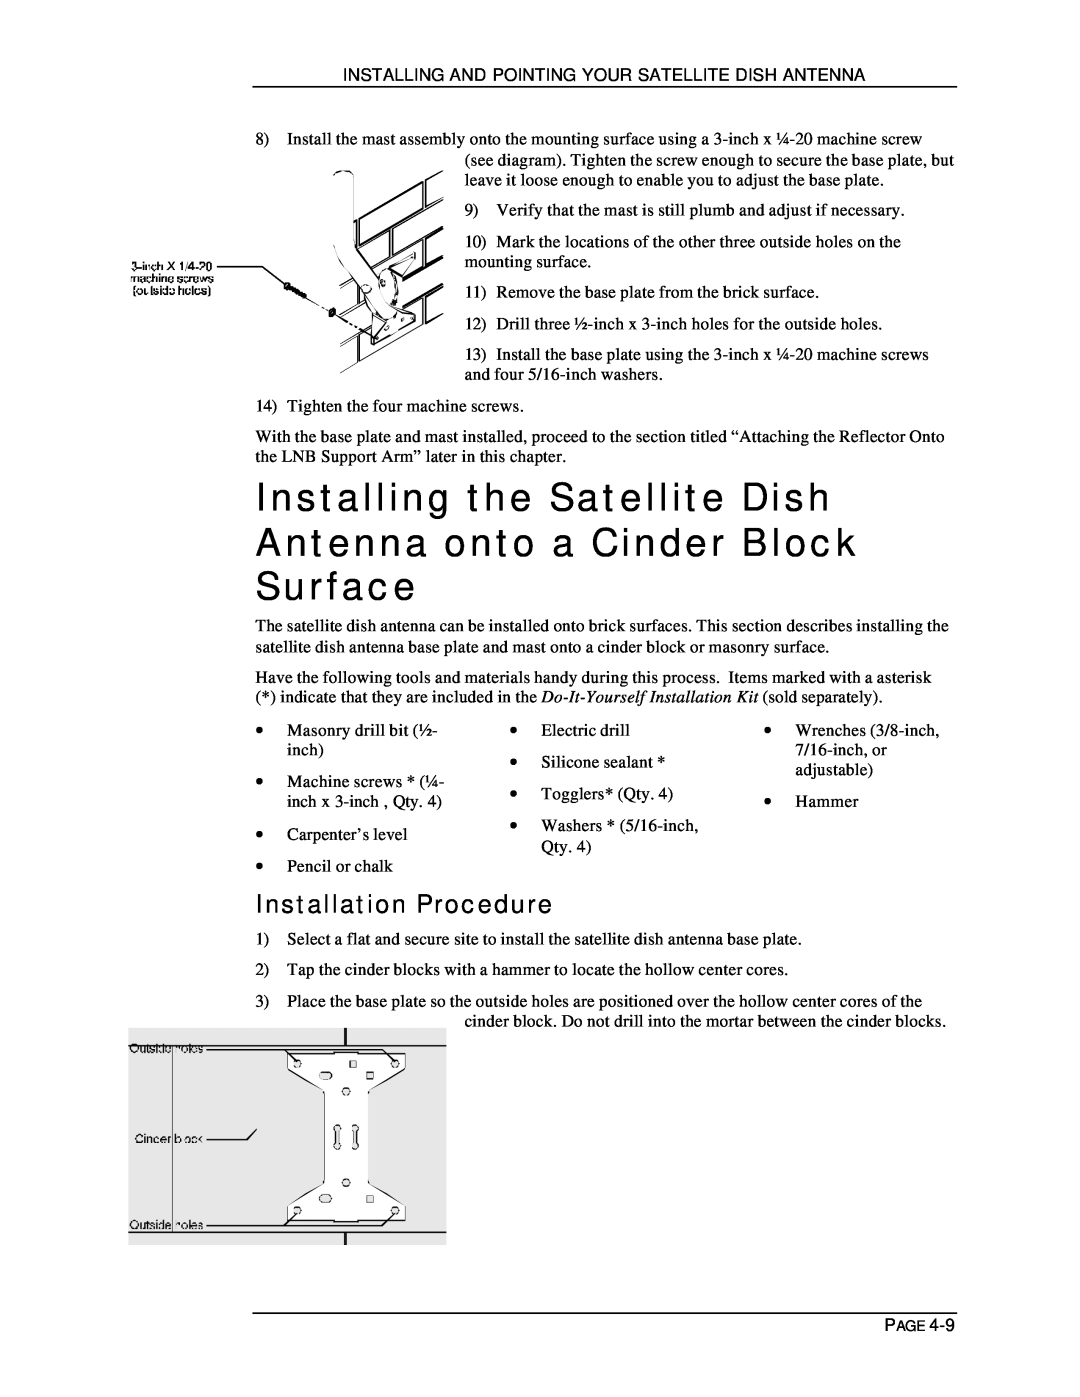 DirecTV HIRD-D11, HIRD-D01 Installing the Satellite Dish, Antenna onto a Cinder Block Surface, Installation Procedure 